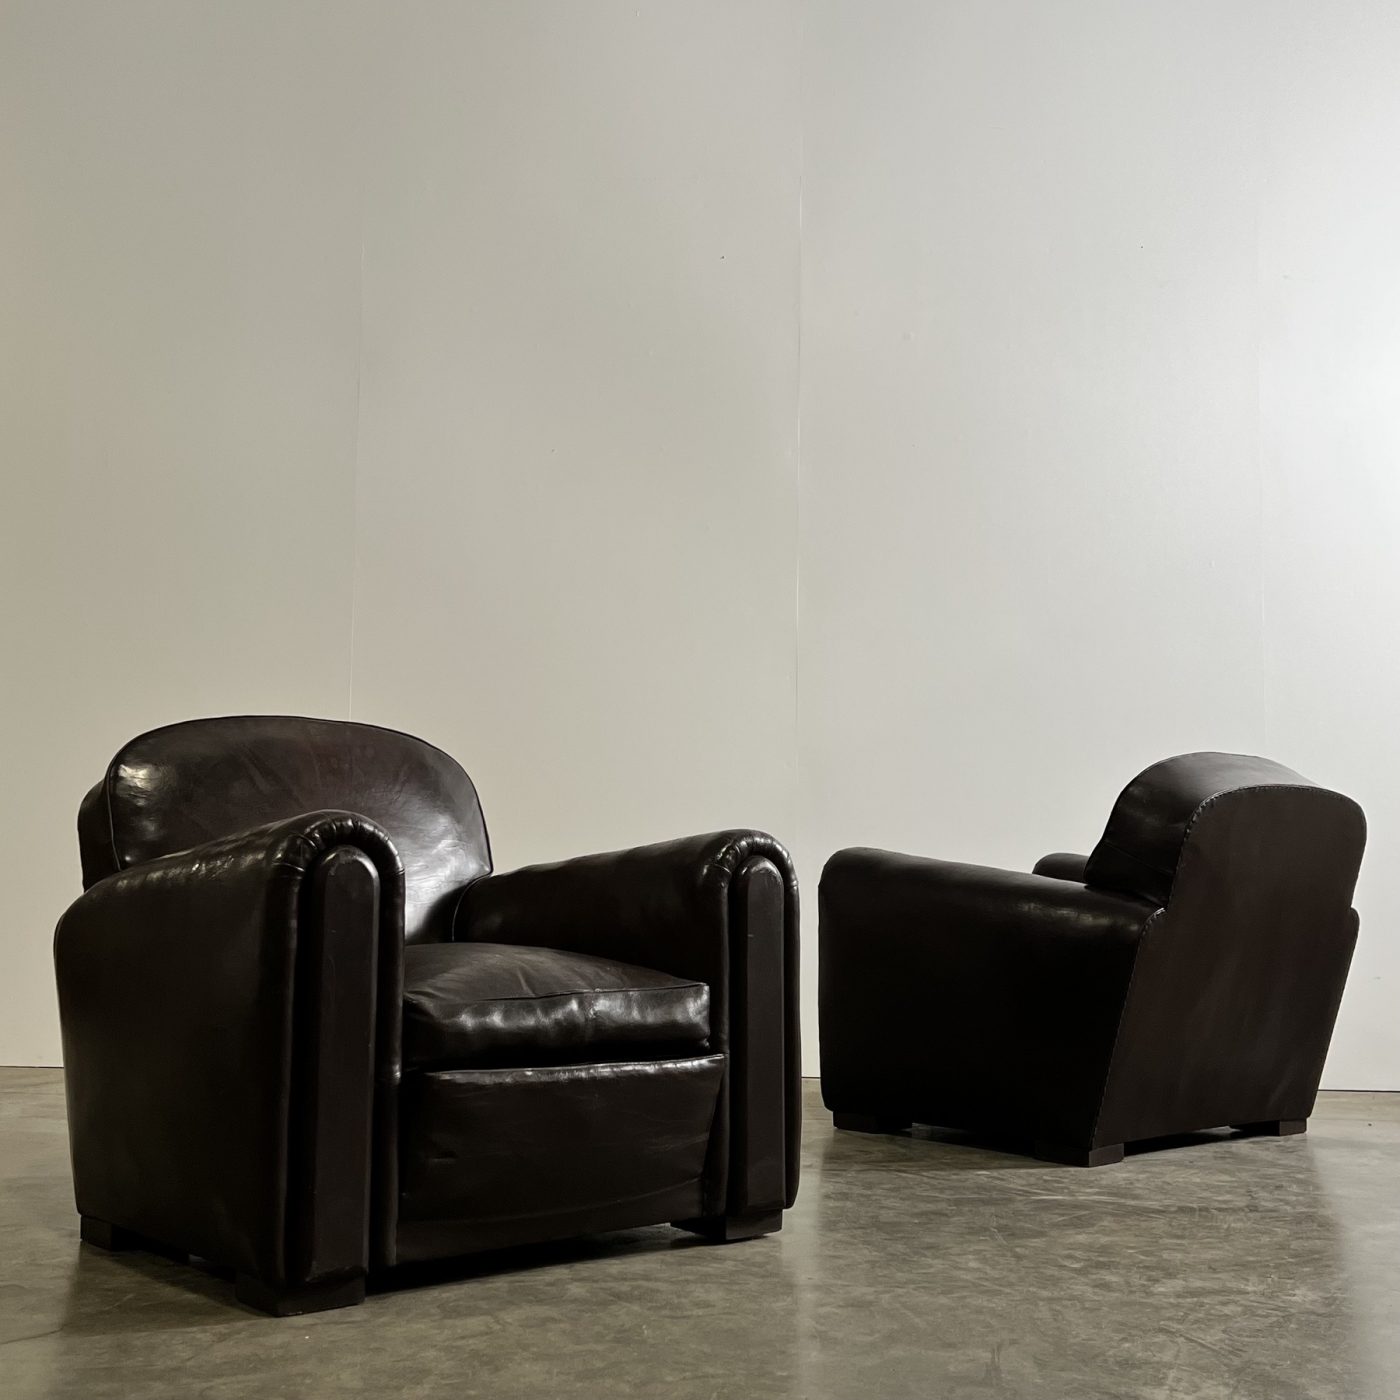 objet-vagabond-leather-armchairs0002